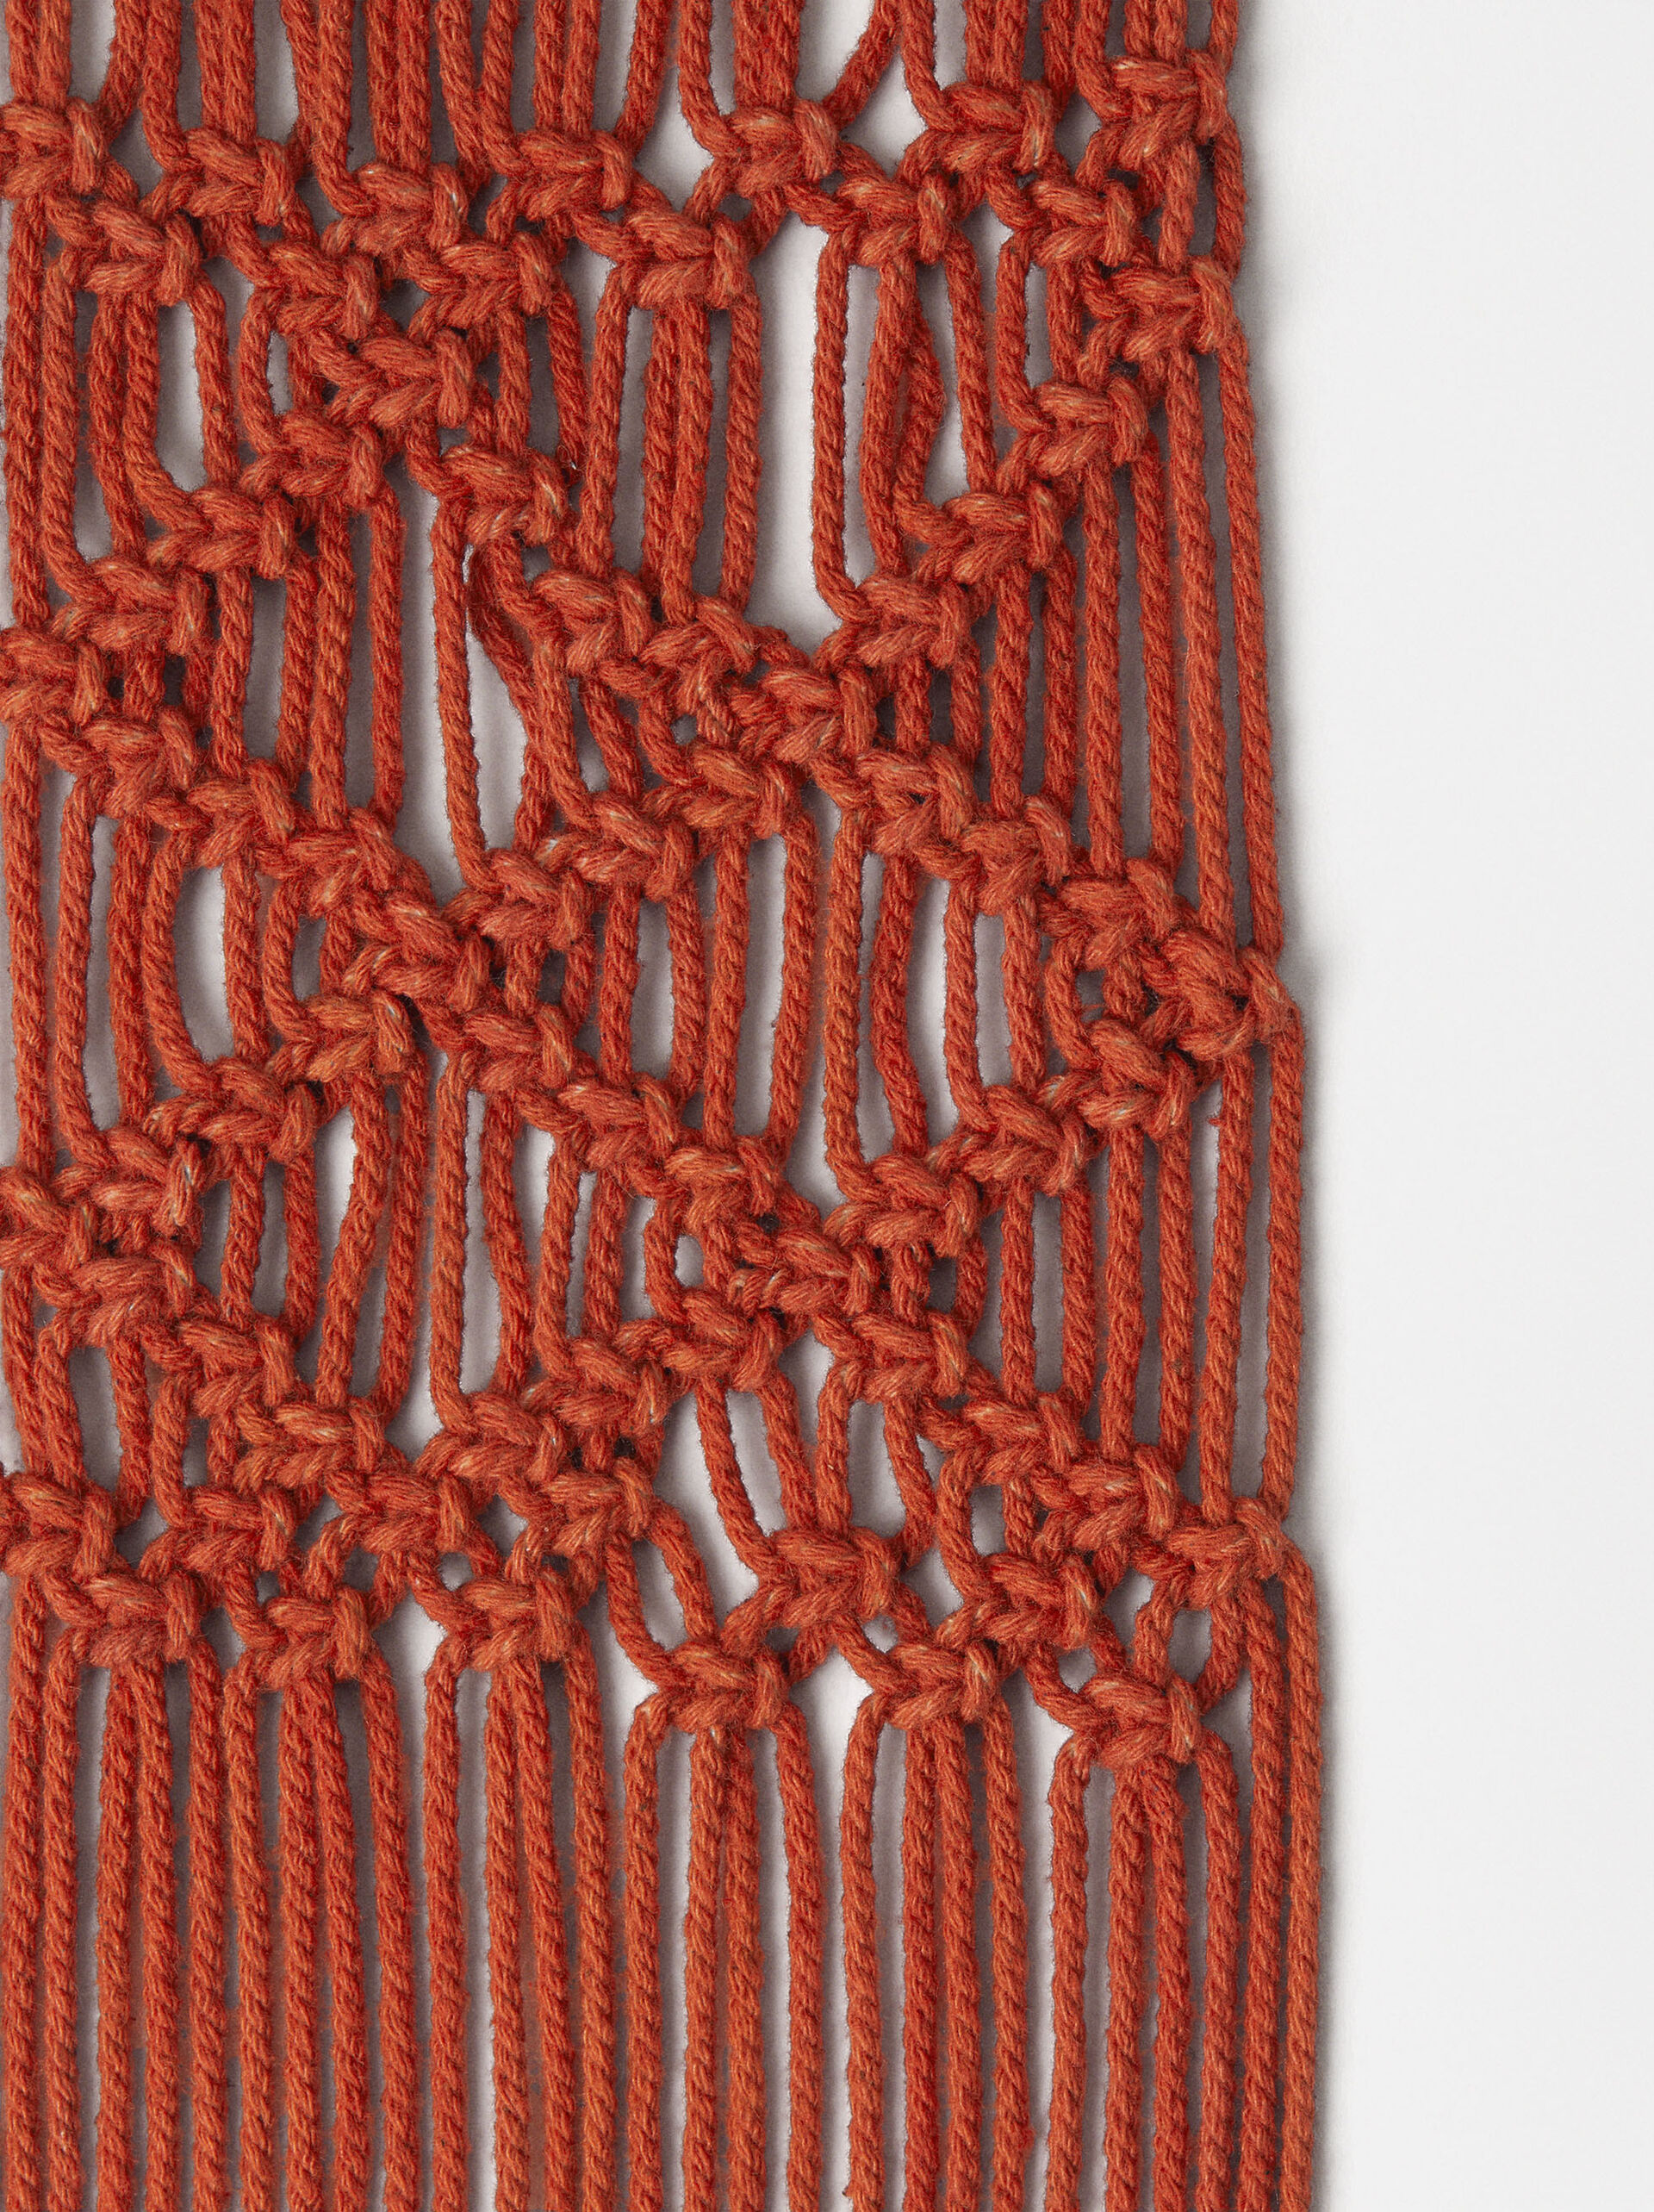 Exclusivo Online - Pulseira Madeira Crochet image number 2.0